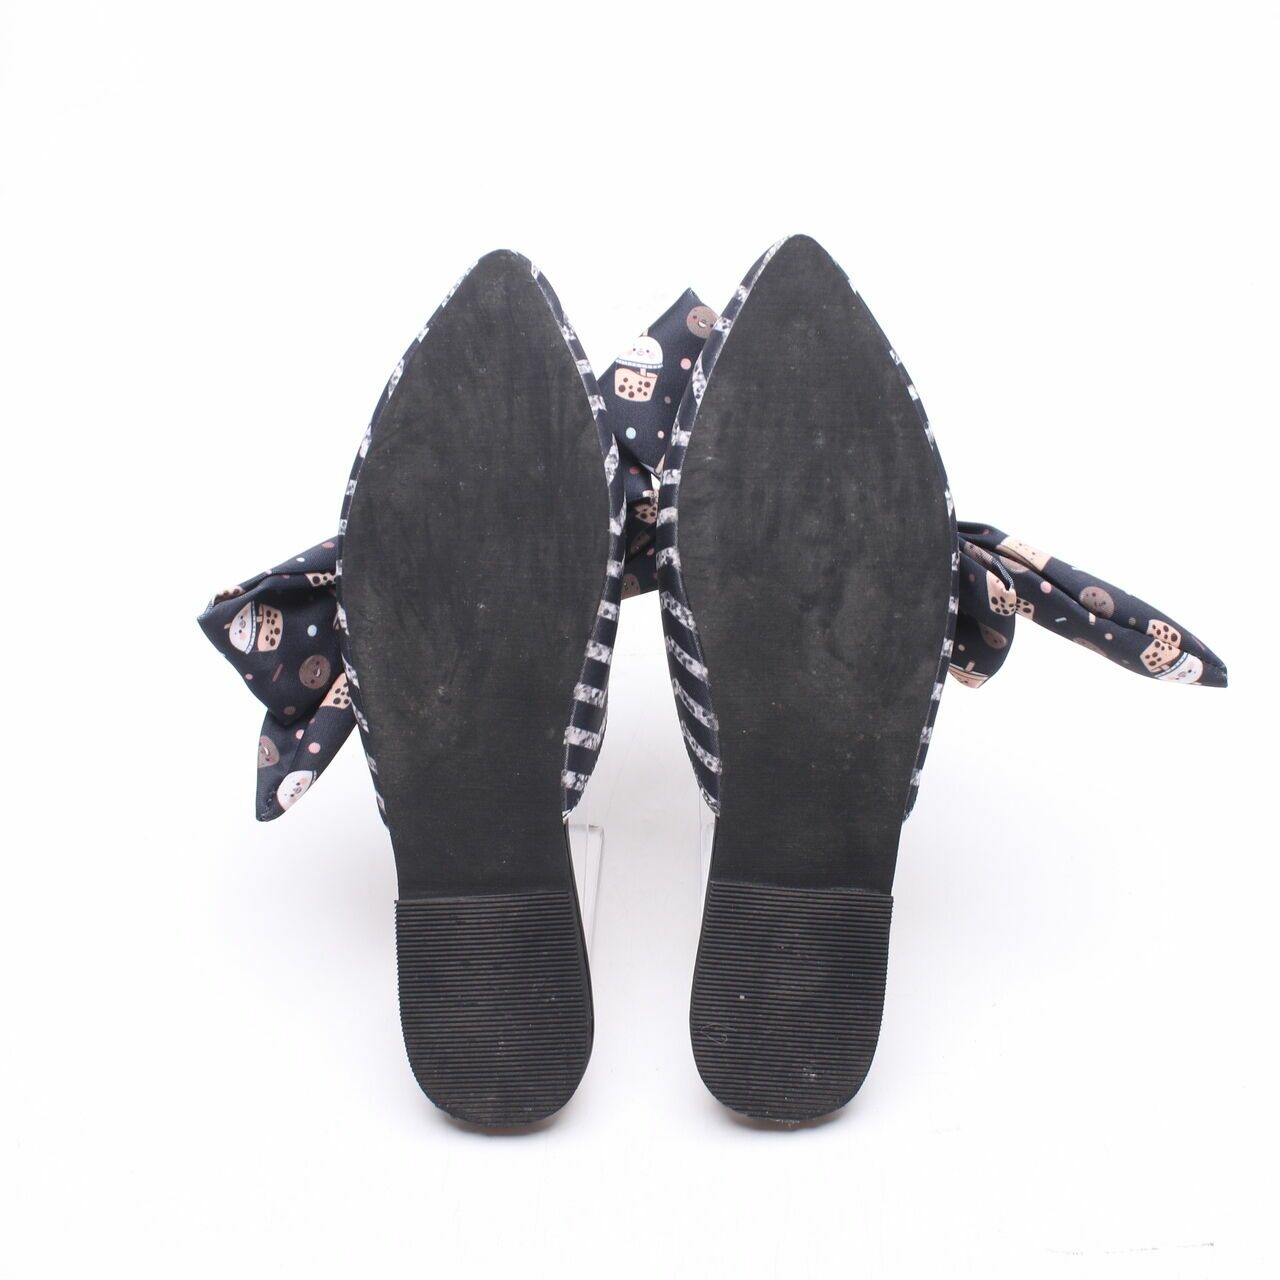 Marnova Black Pattern Mules Sandals